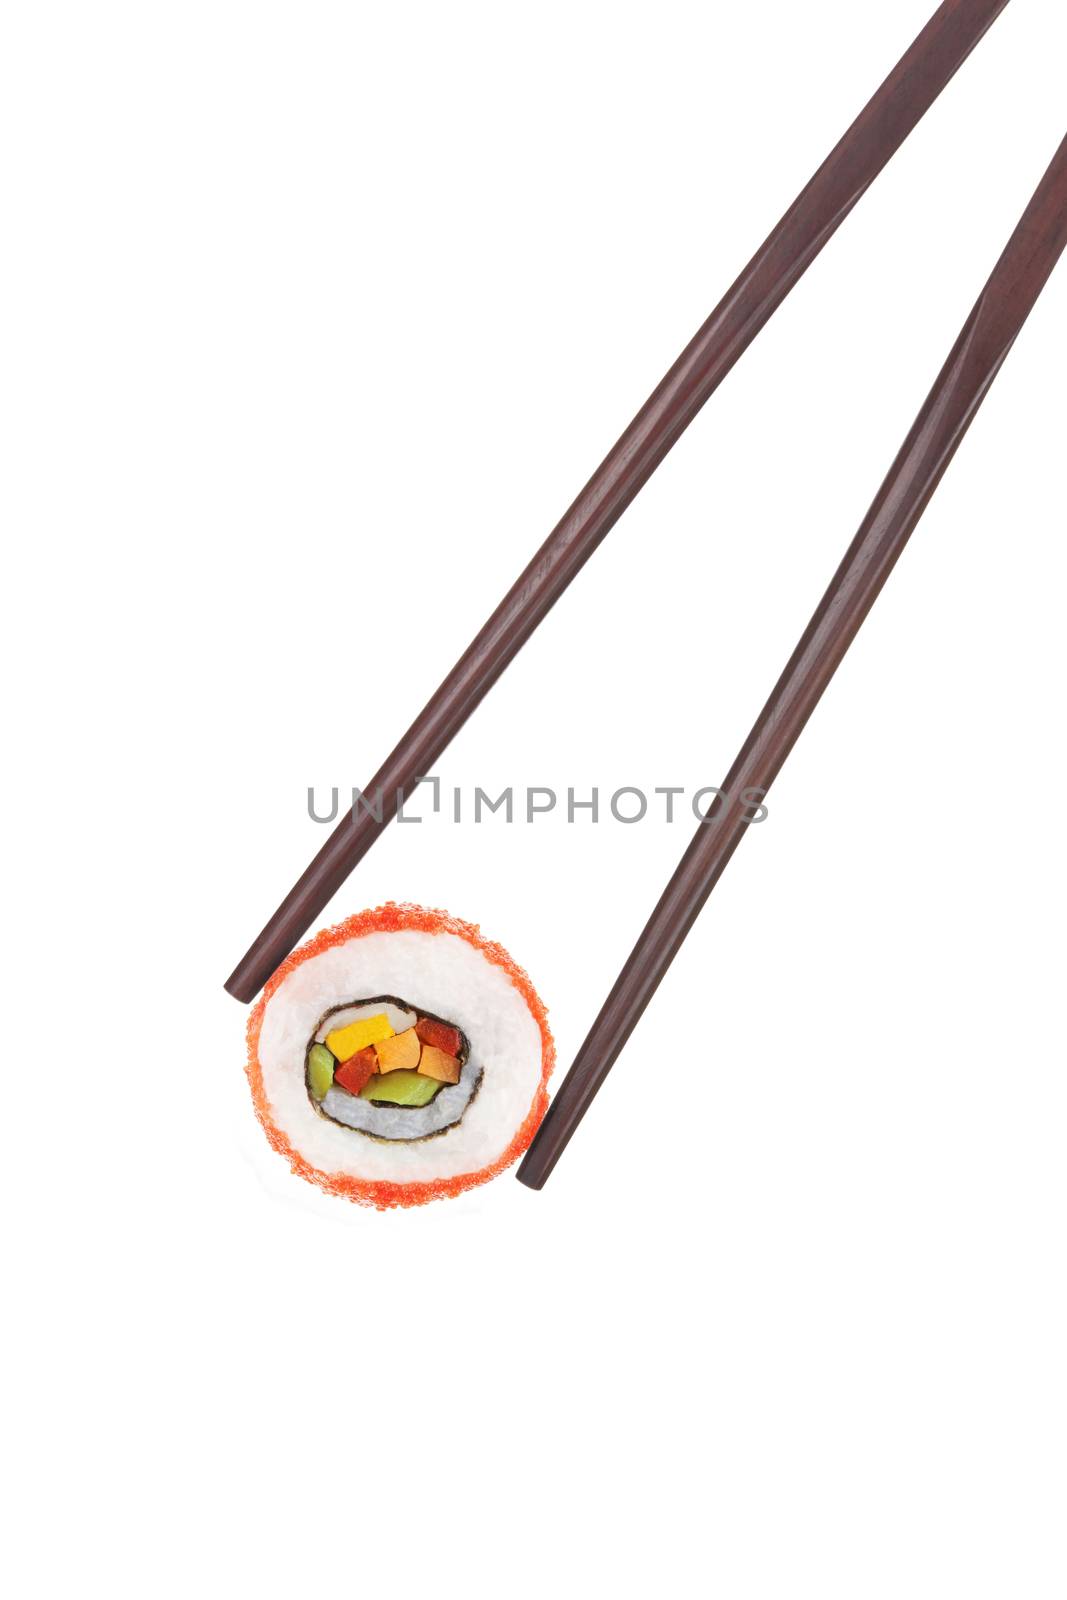 California maki sushi and chopsticks. by eskymaks